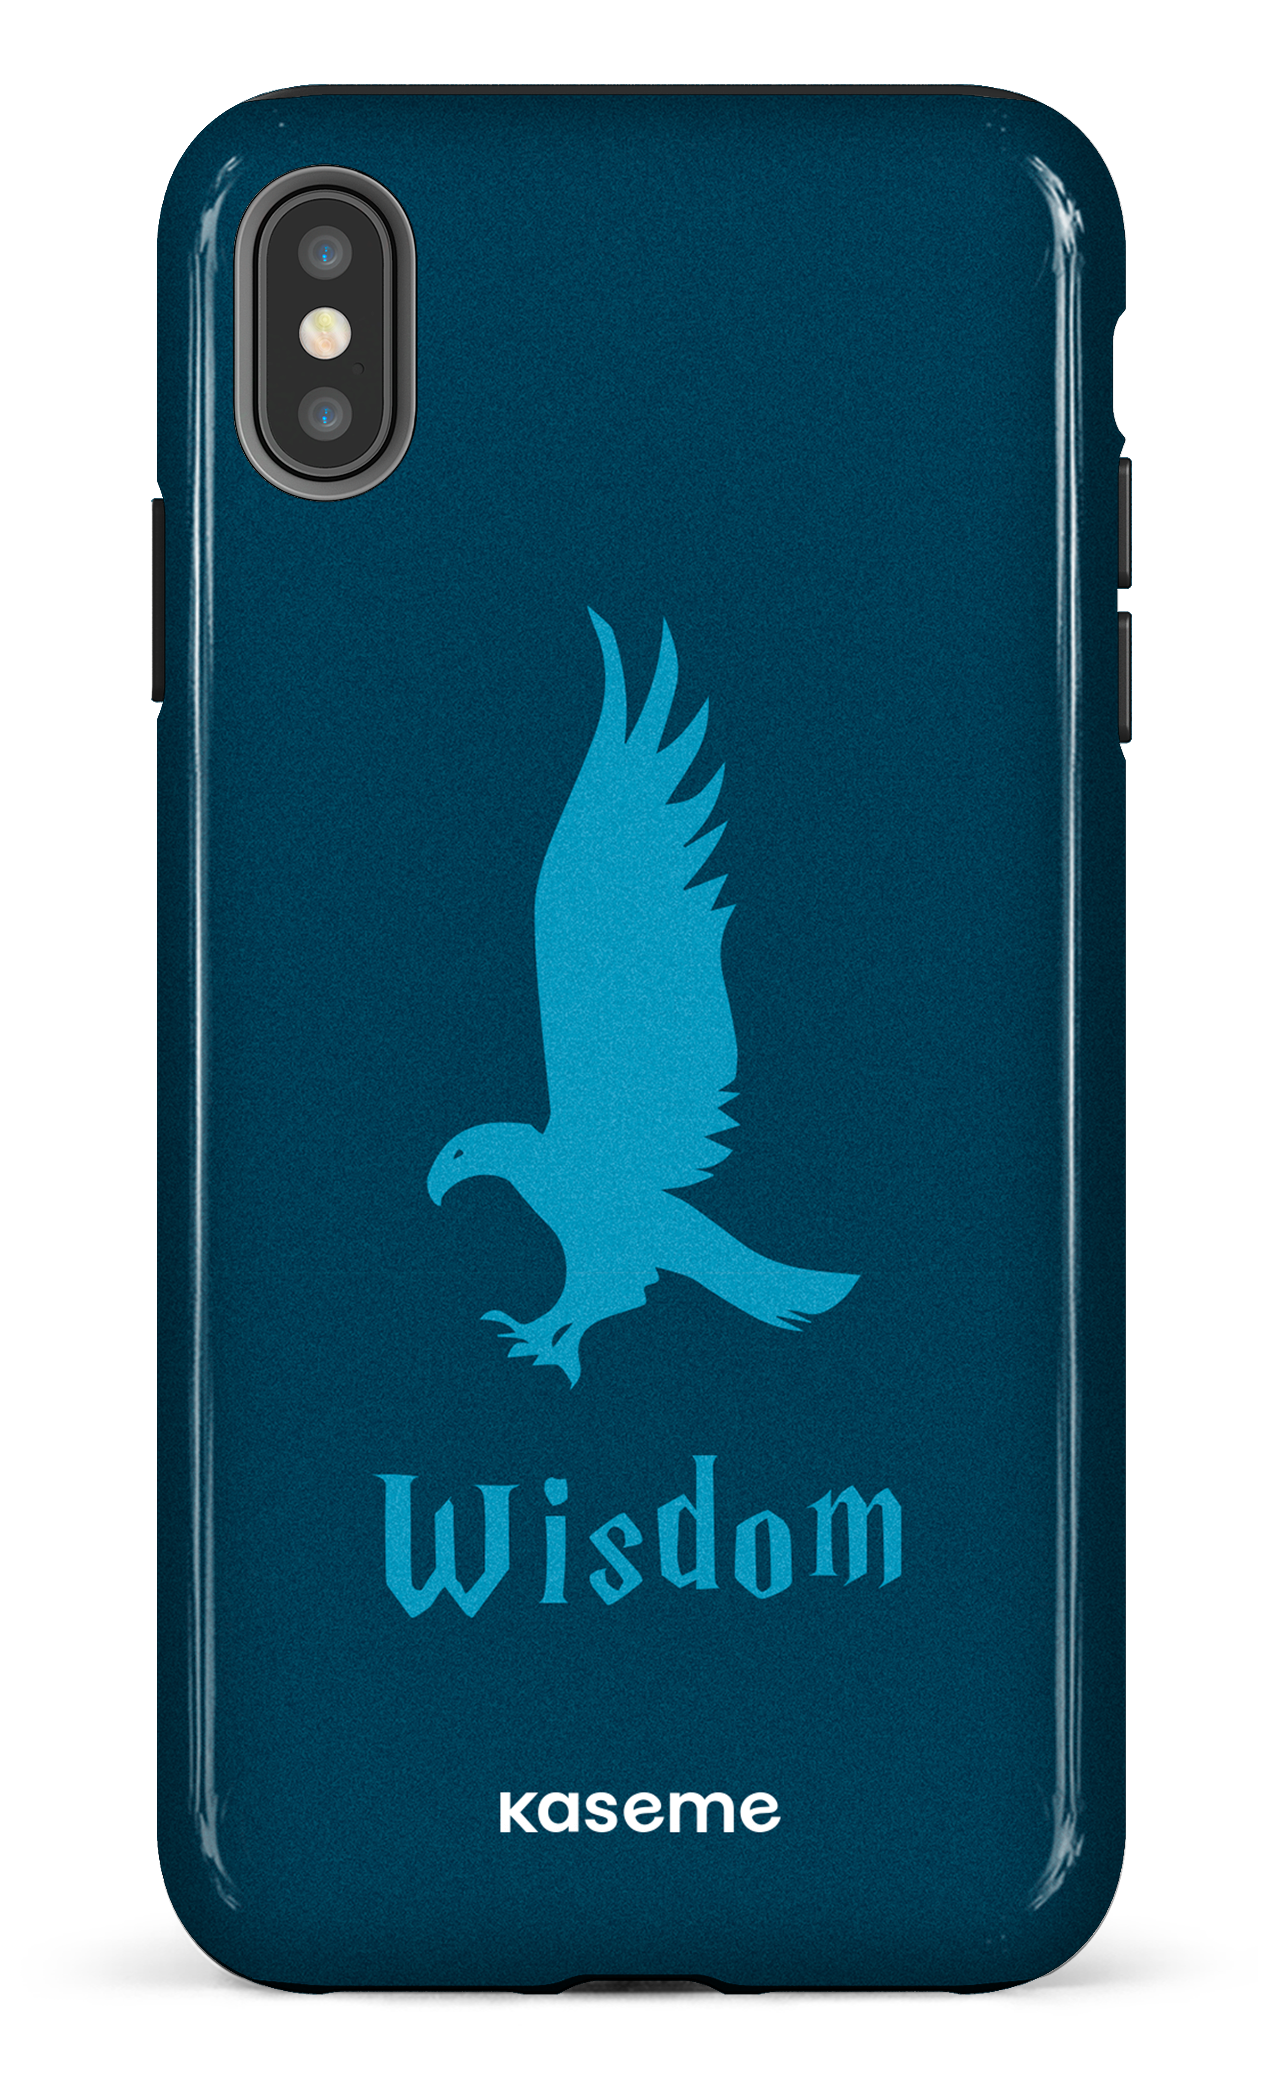 Wisdom - iPhone XS Max